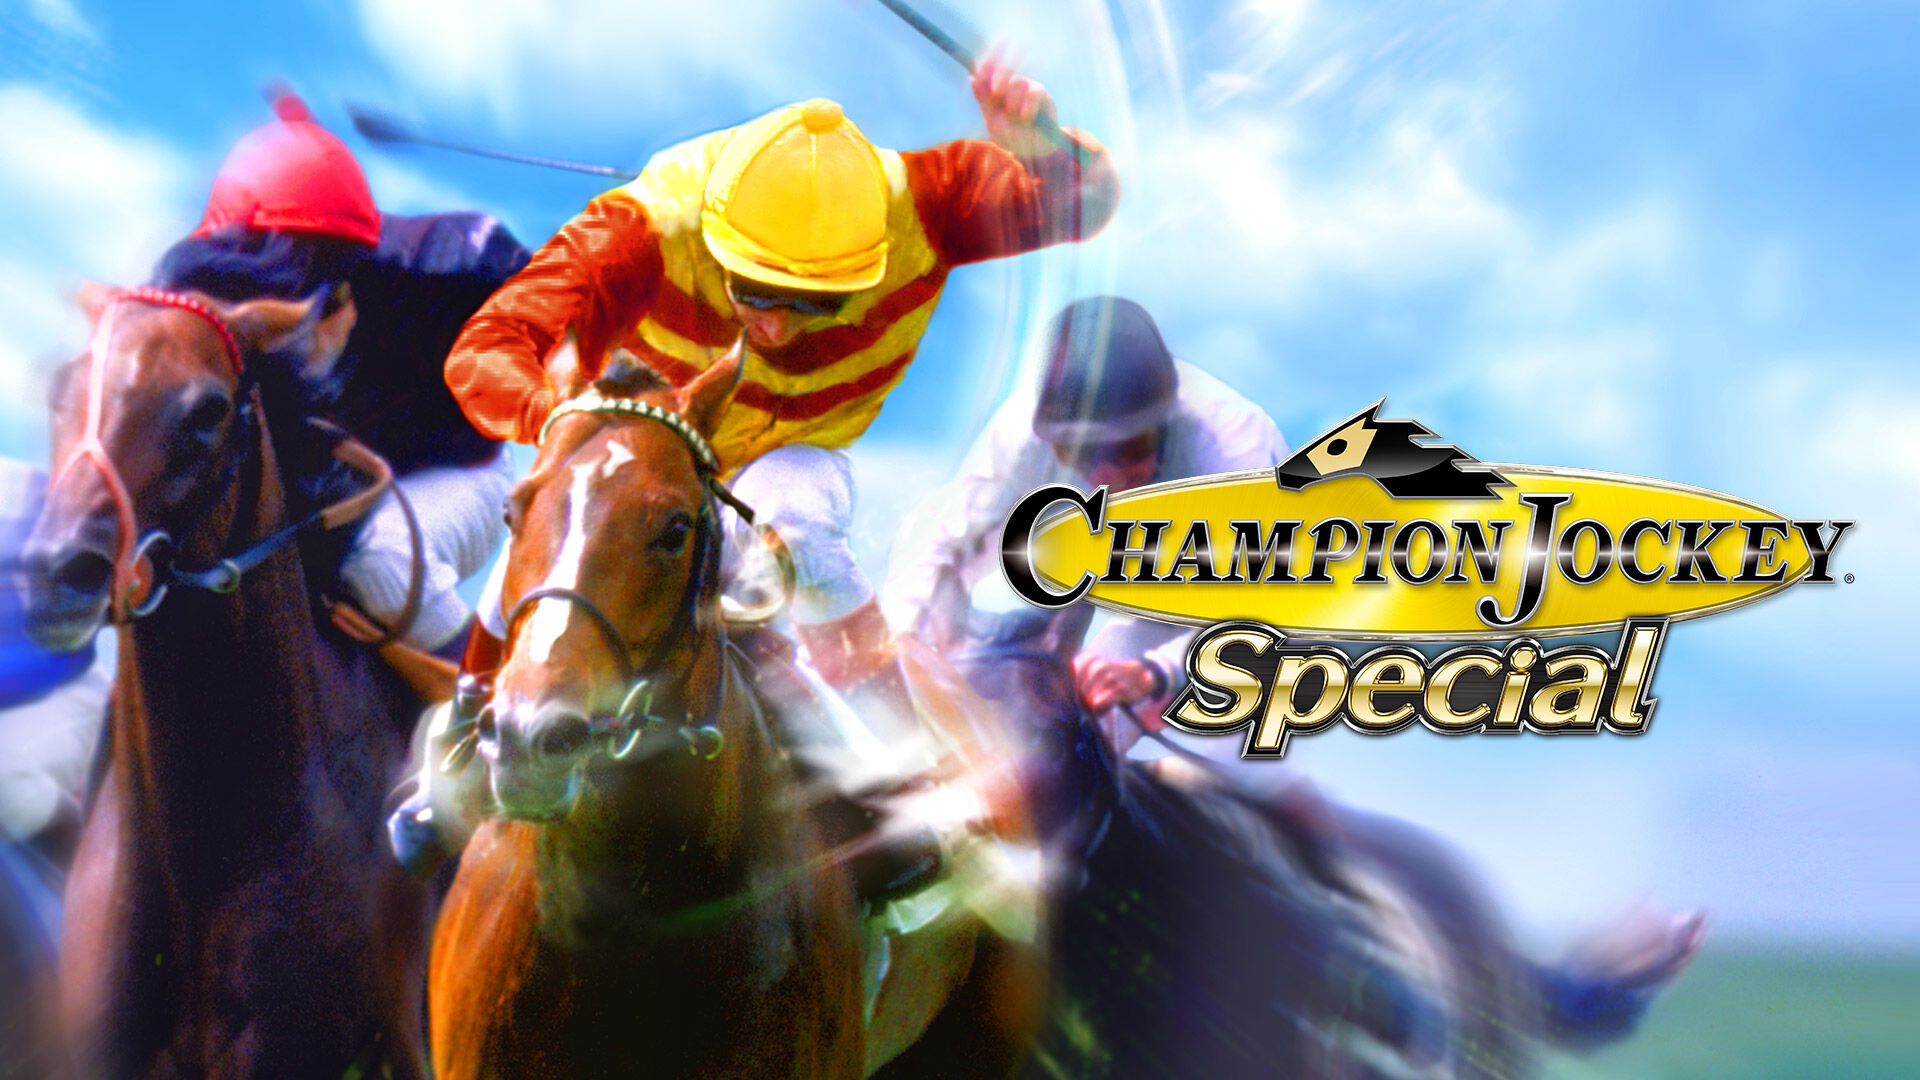 Champion Jockey Specialゲームソフト/ゲーム機本体